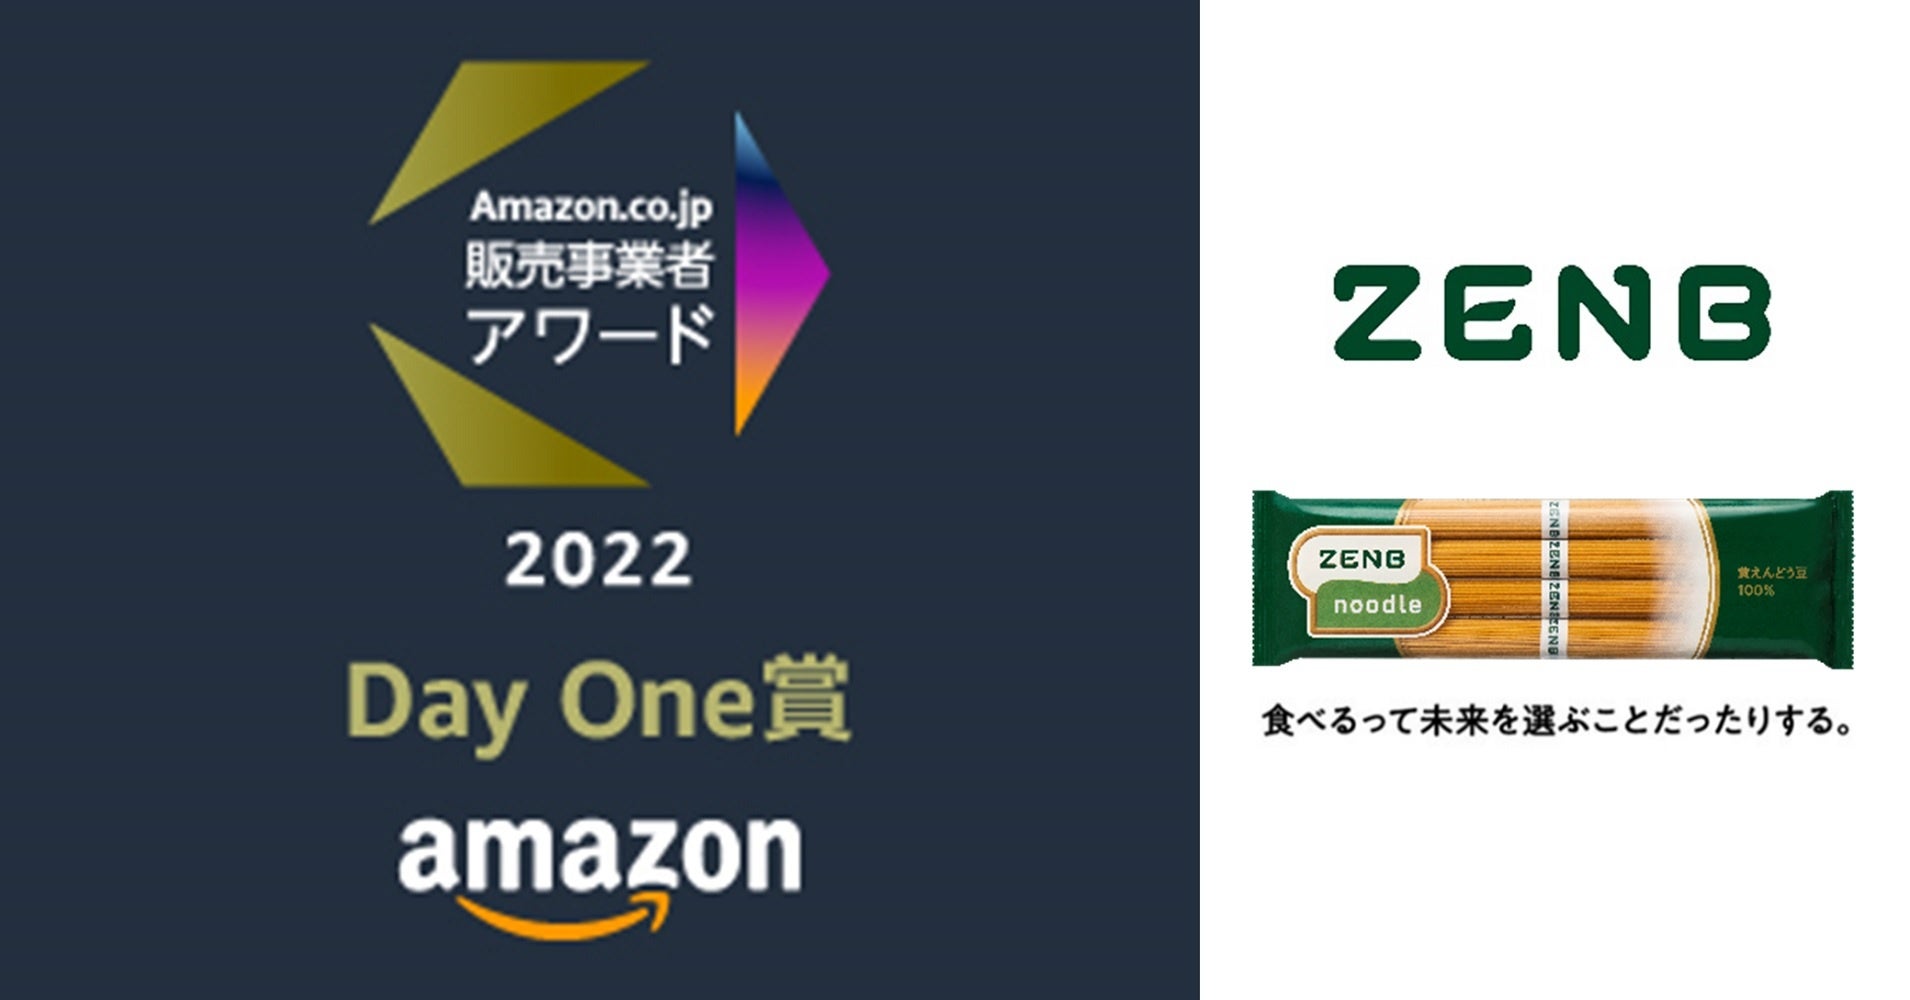 ZENBがAmazon.co.jp 販売事業者アワード2022にて「Day One賞」受賞